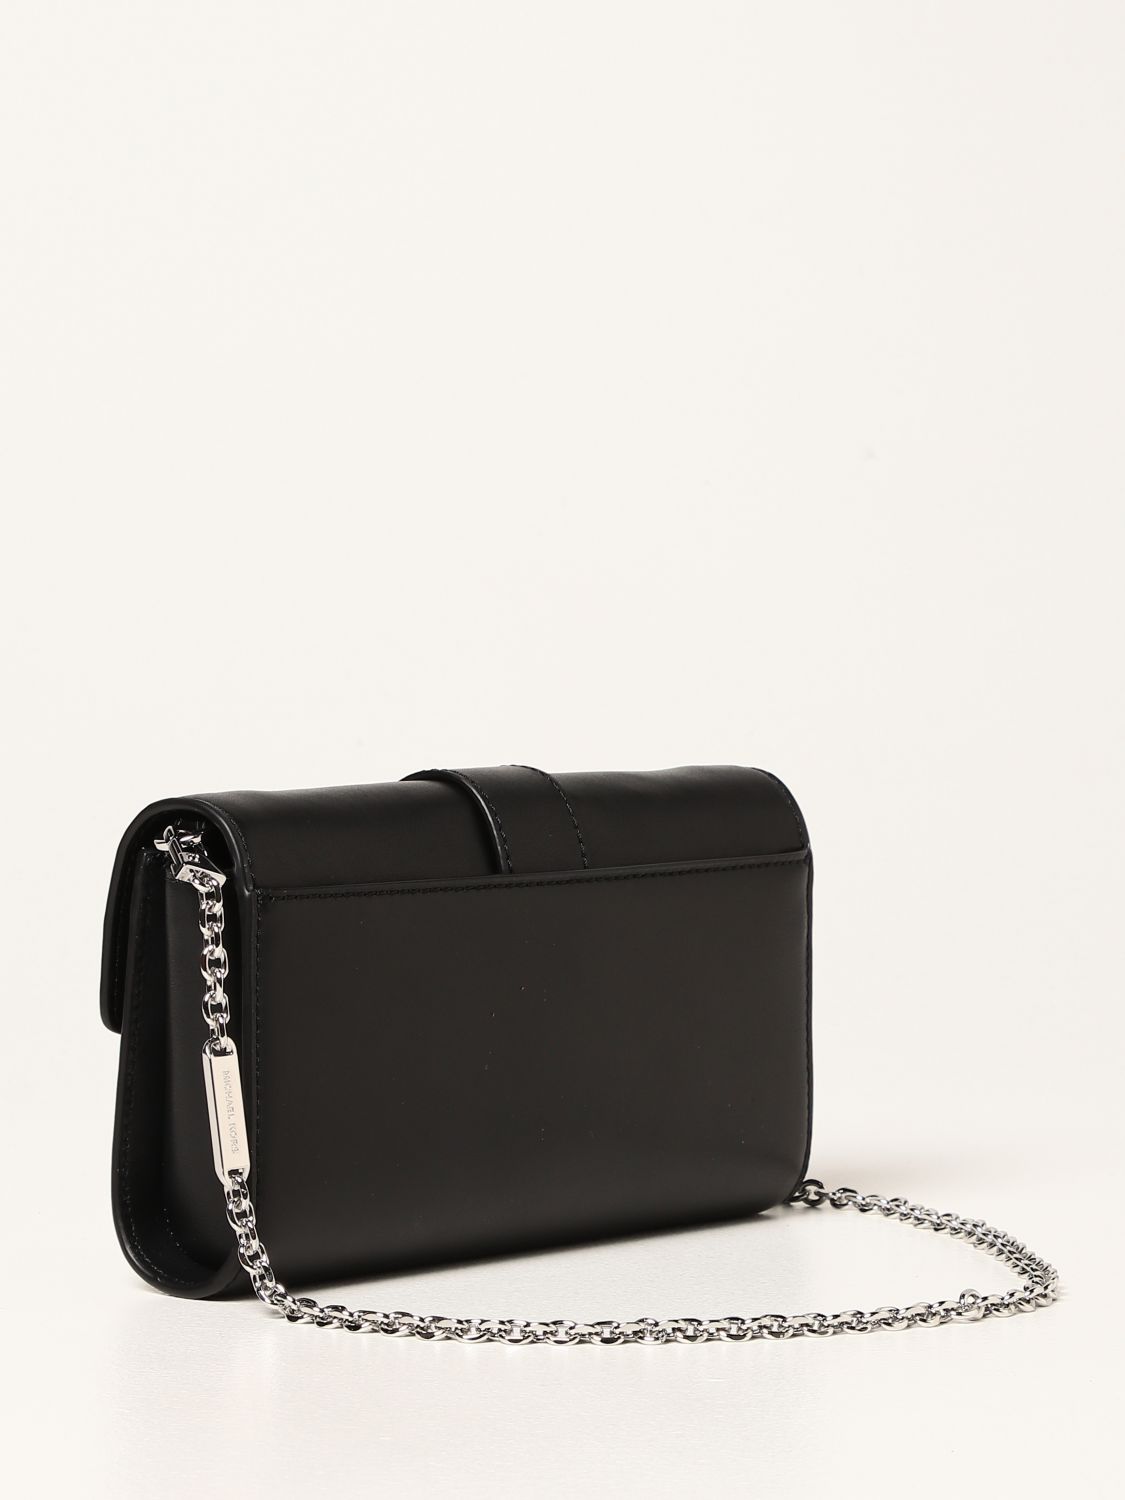 MICHAEL KORS: Penelope Michael leather bag - Black | Clutch Michael ...